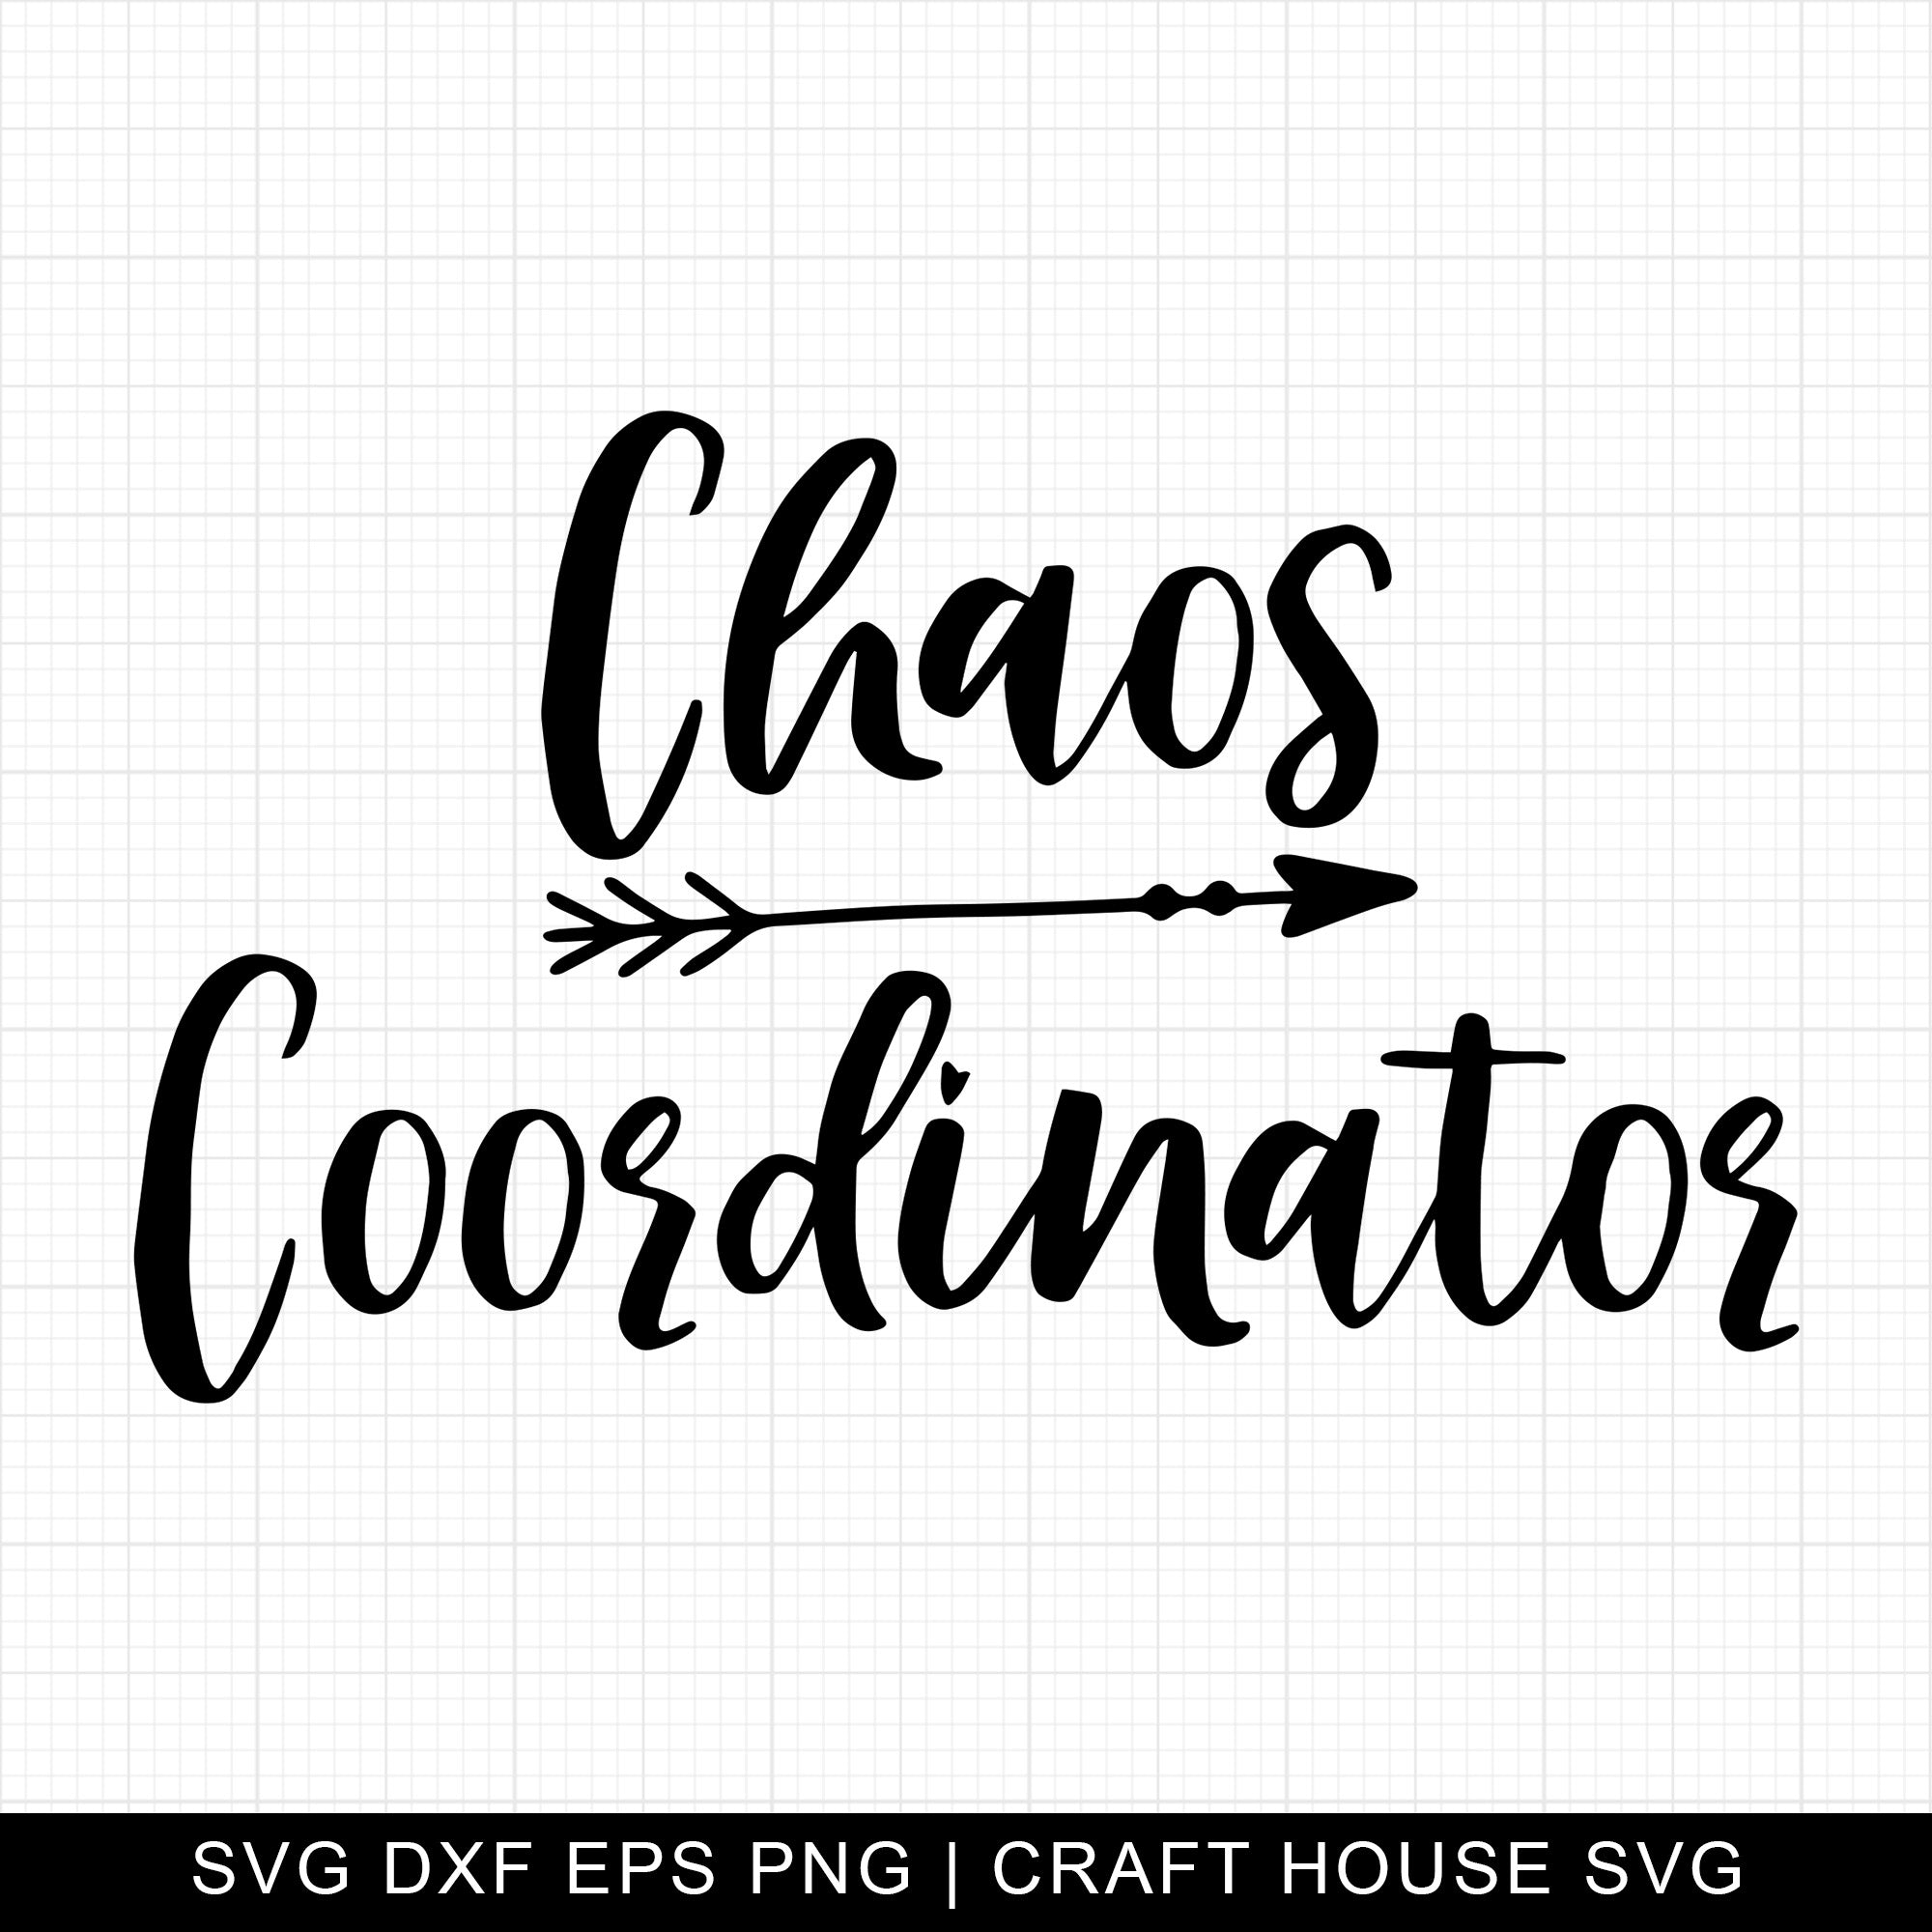 Chaos coordinator SVG | M10F2